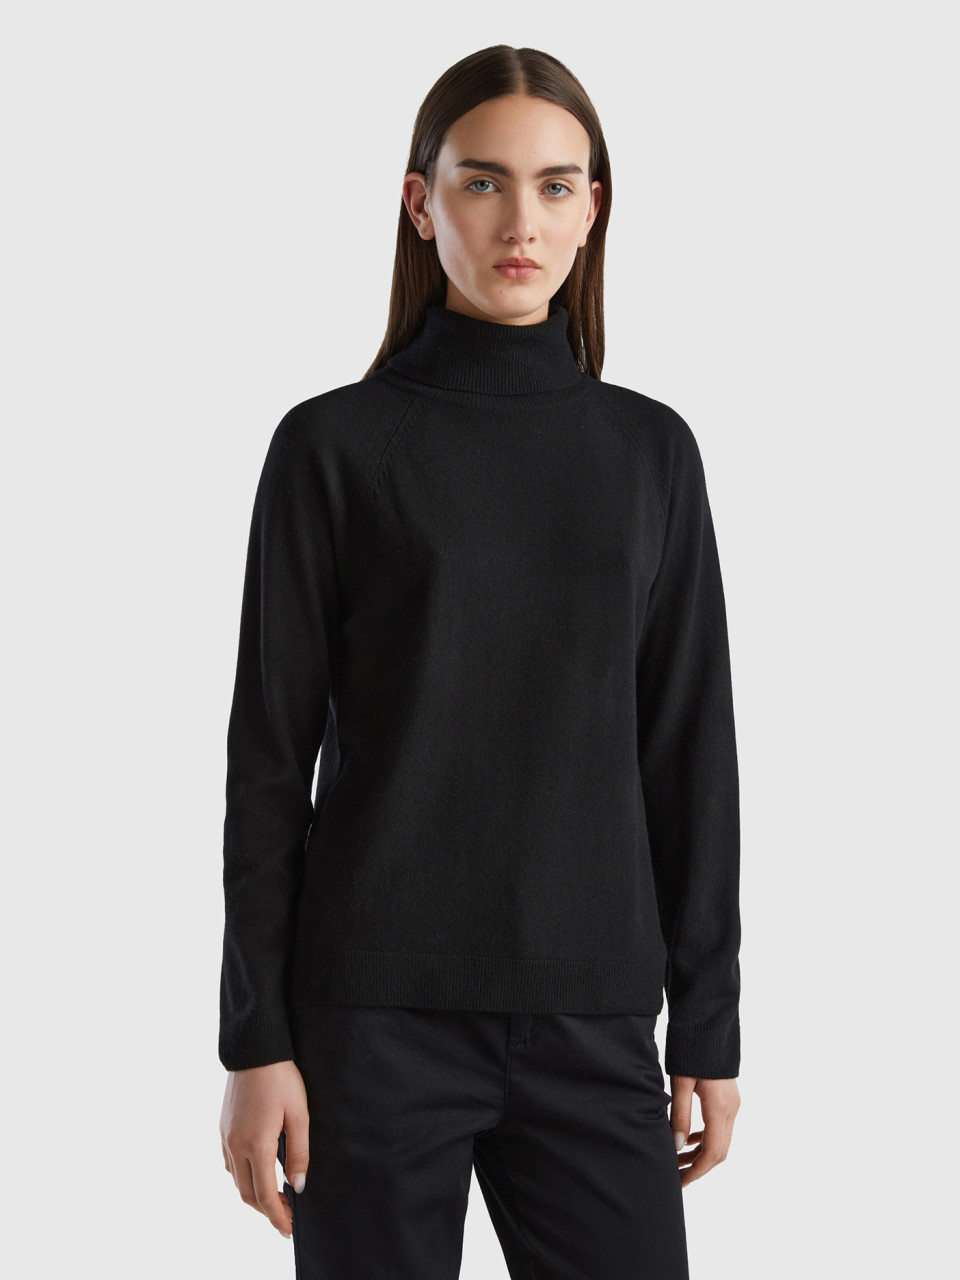 Benetton, Black Turtleneck Sweater In Cashmere And Wool Blend, Black, Women